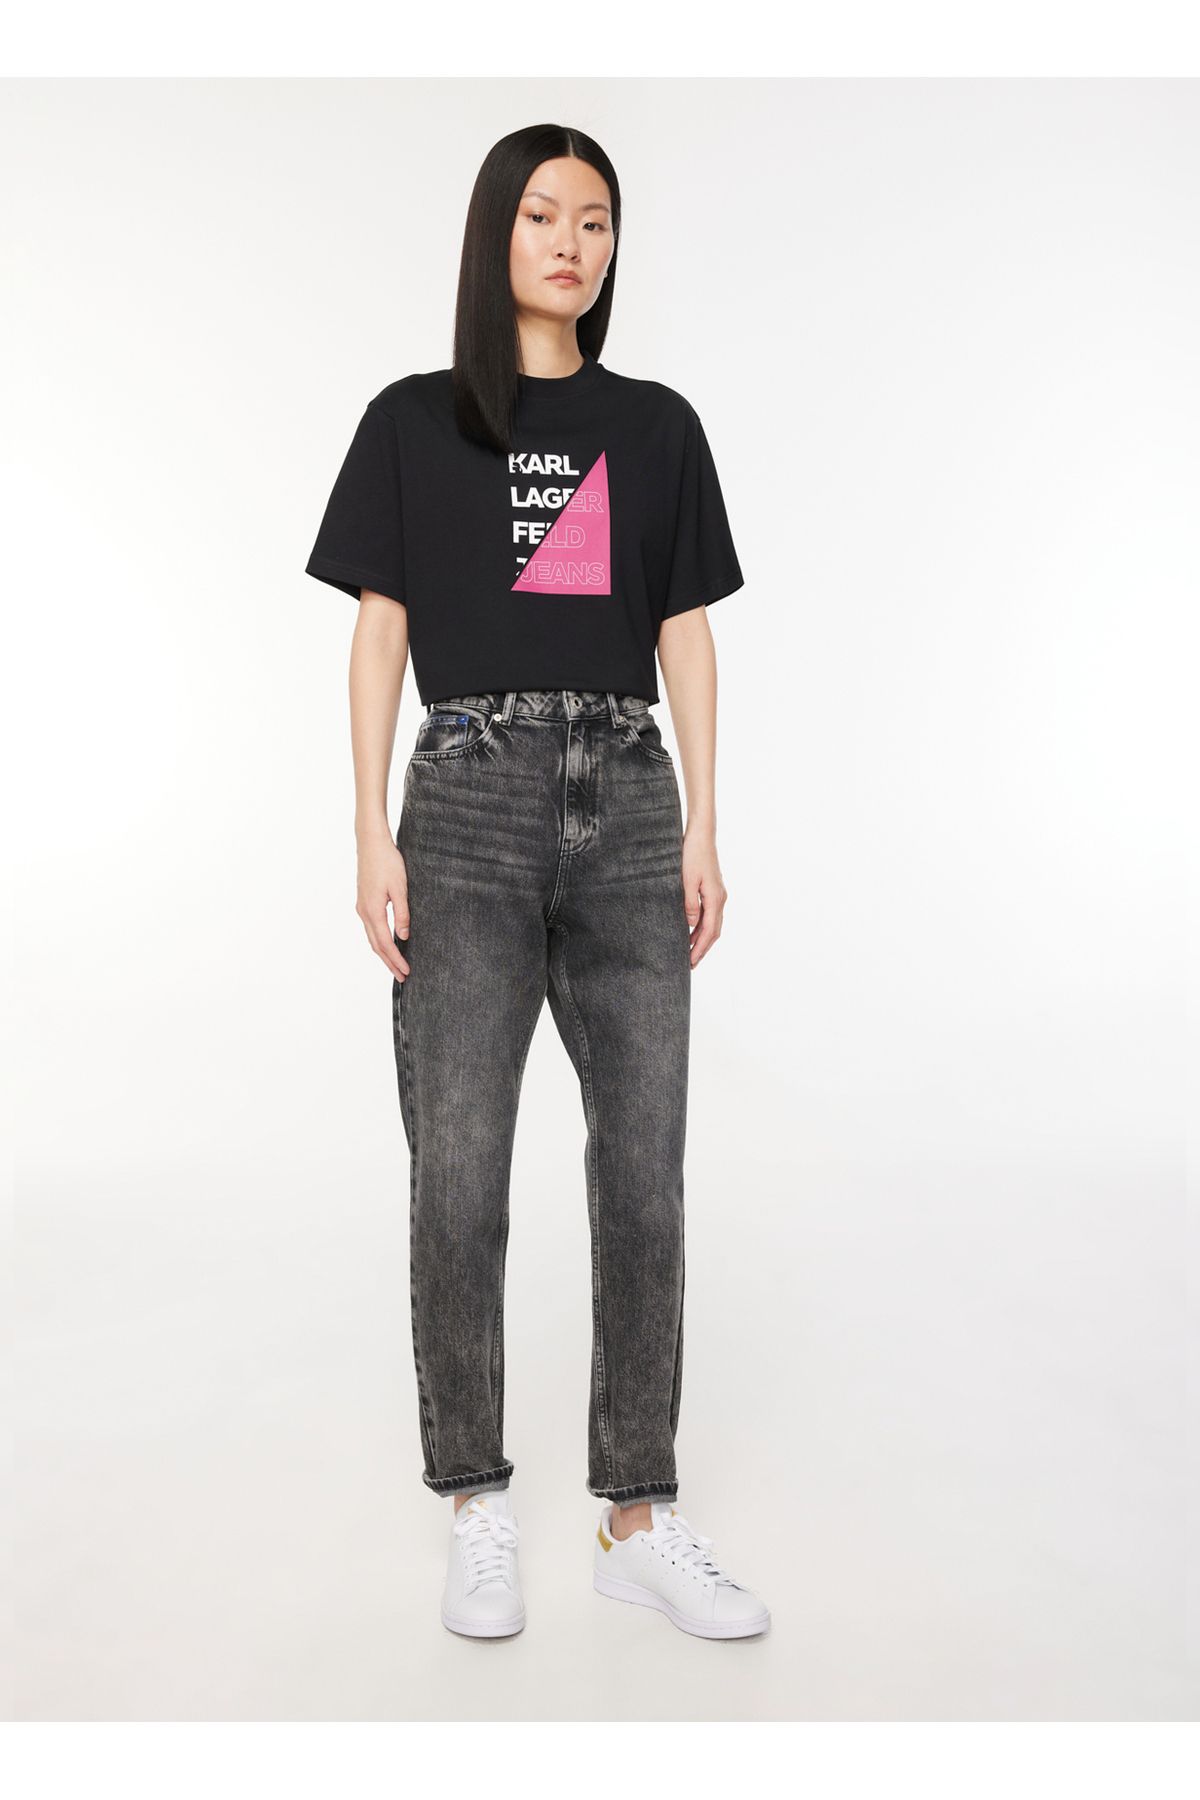 Karl Lagerfeld Jeans Bisiklet Yaka Baskılı Siyah Kadın T-shirt 236j1710